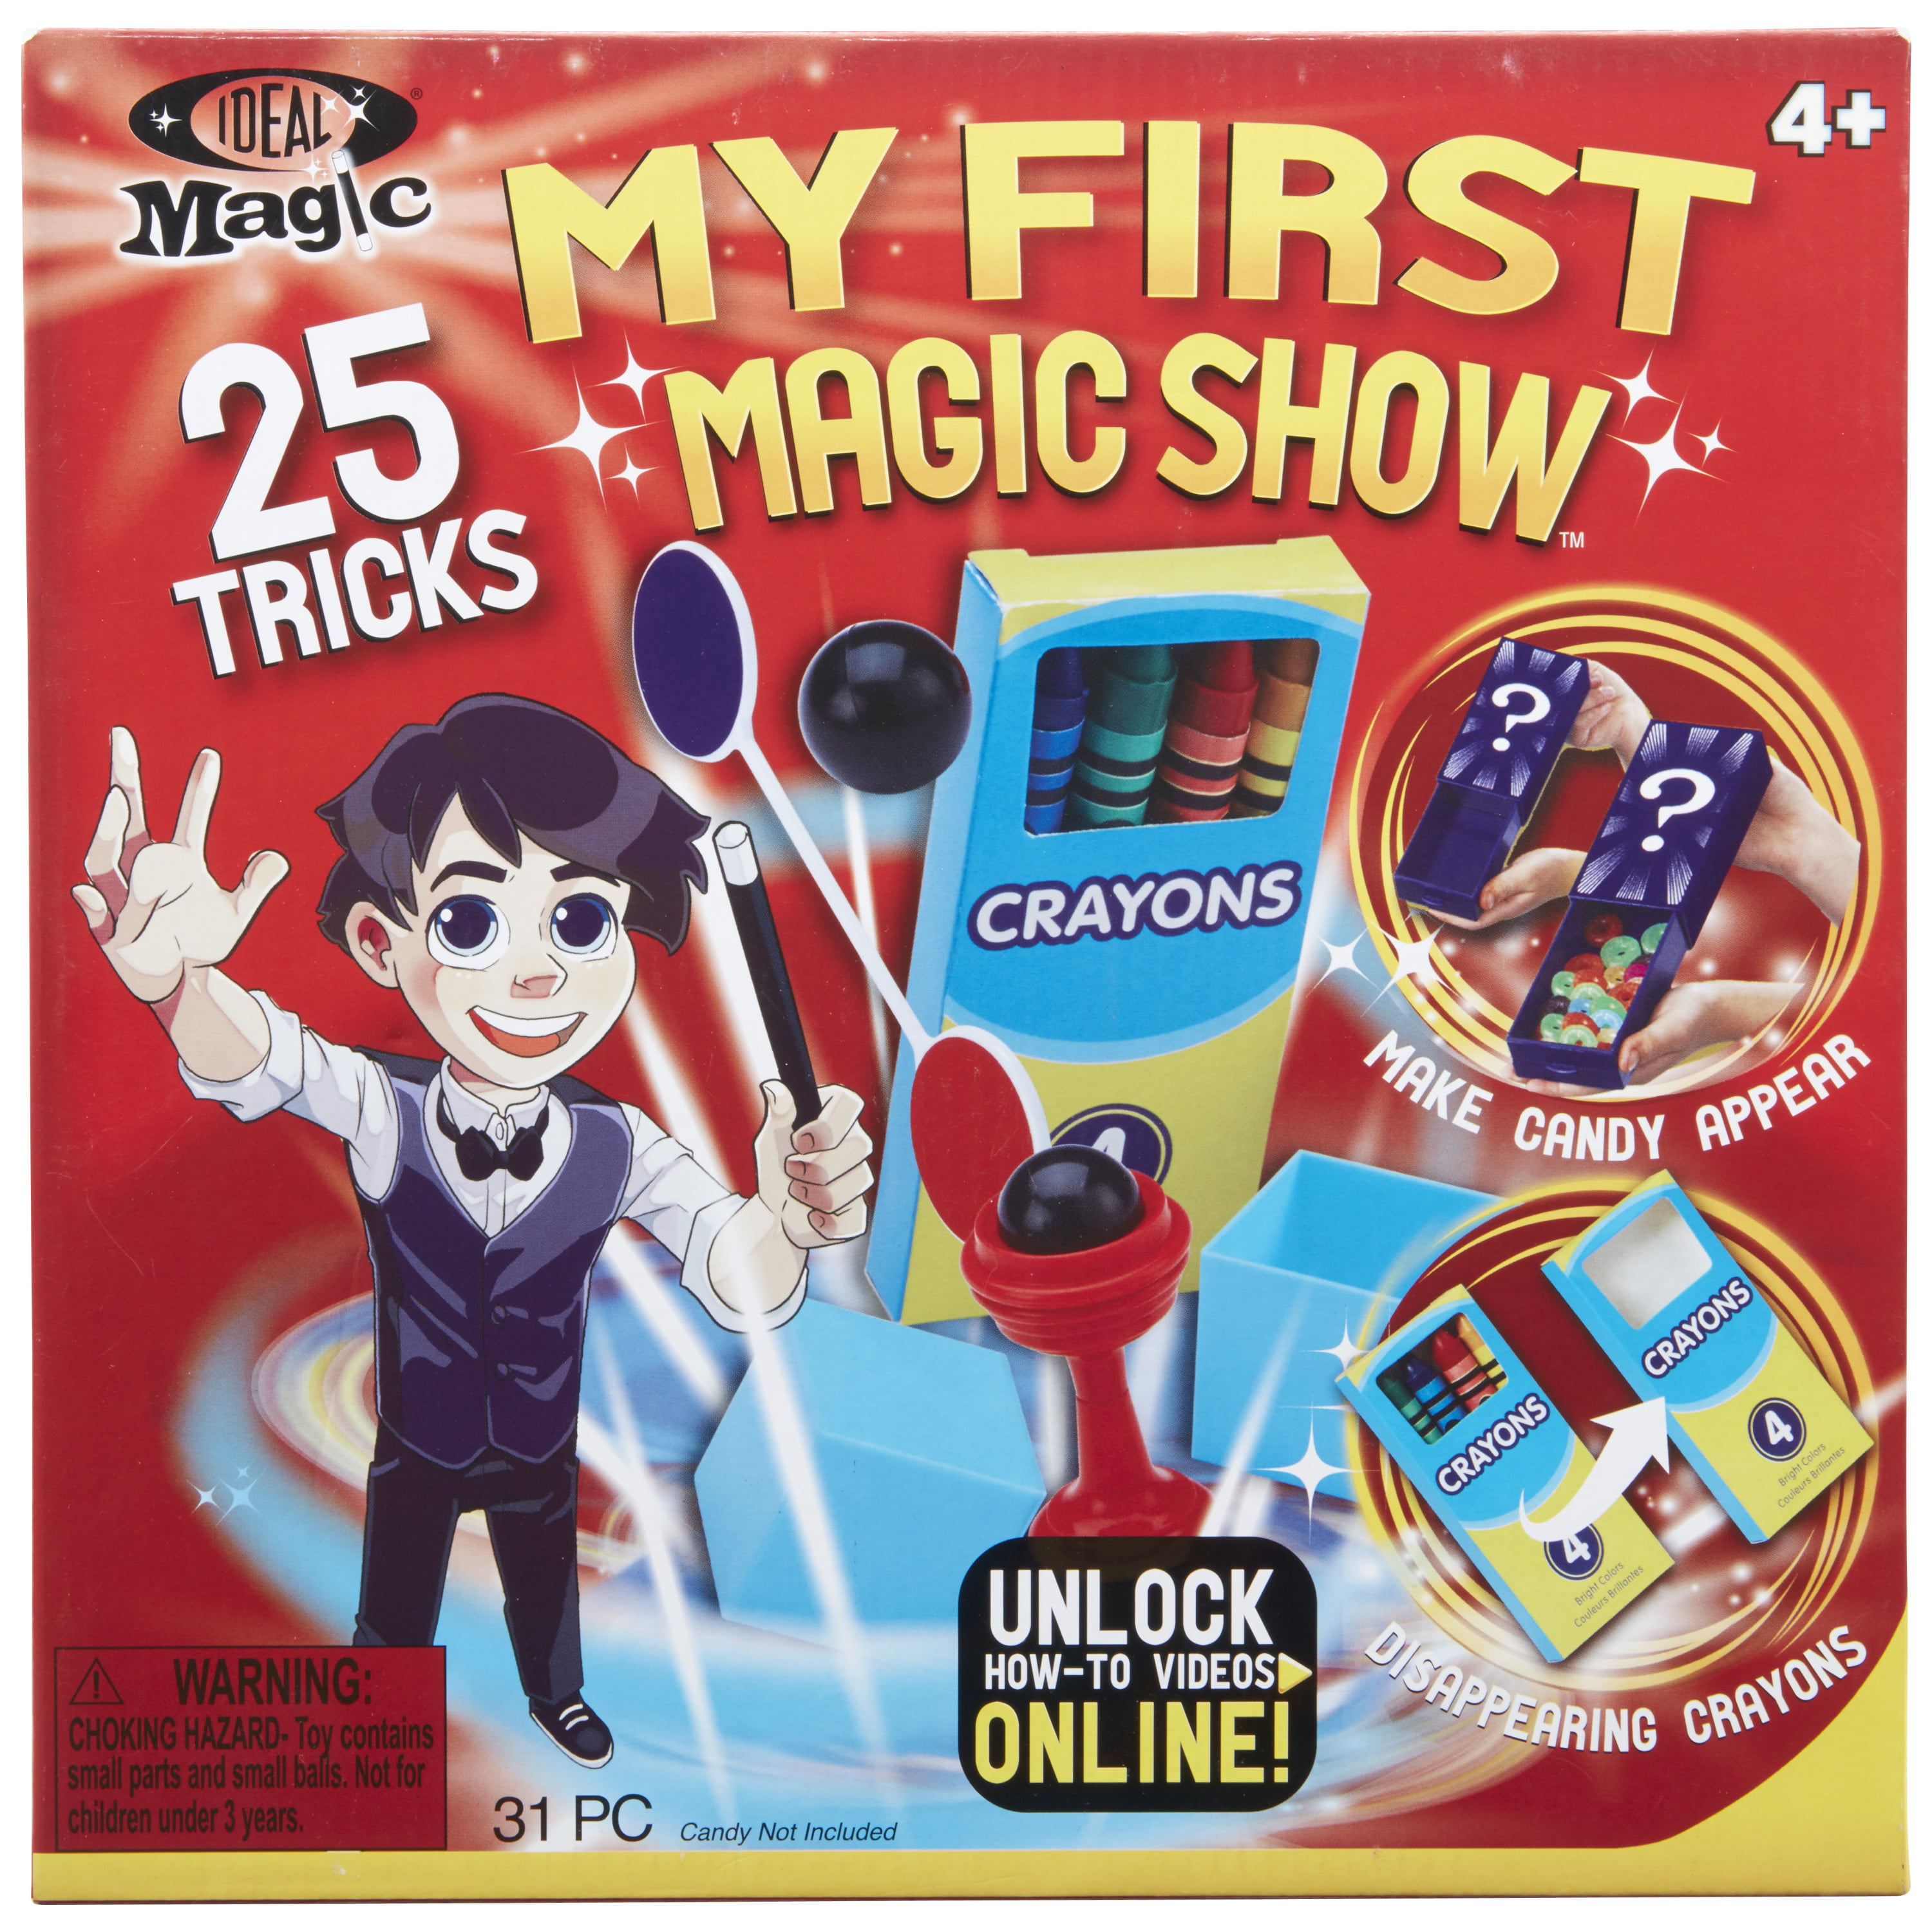 Ideal 40-Trick Magic Show Kit Free Shipping